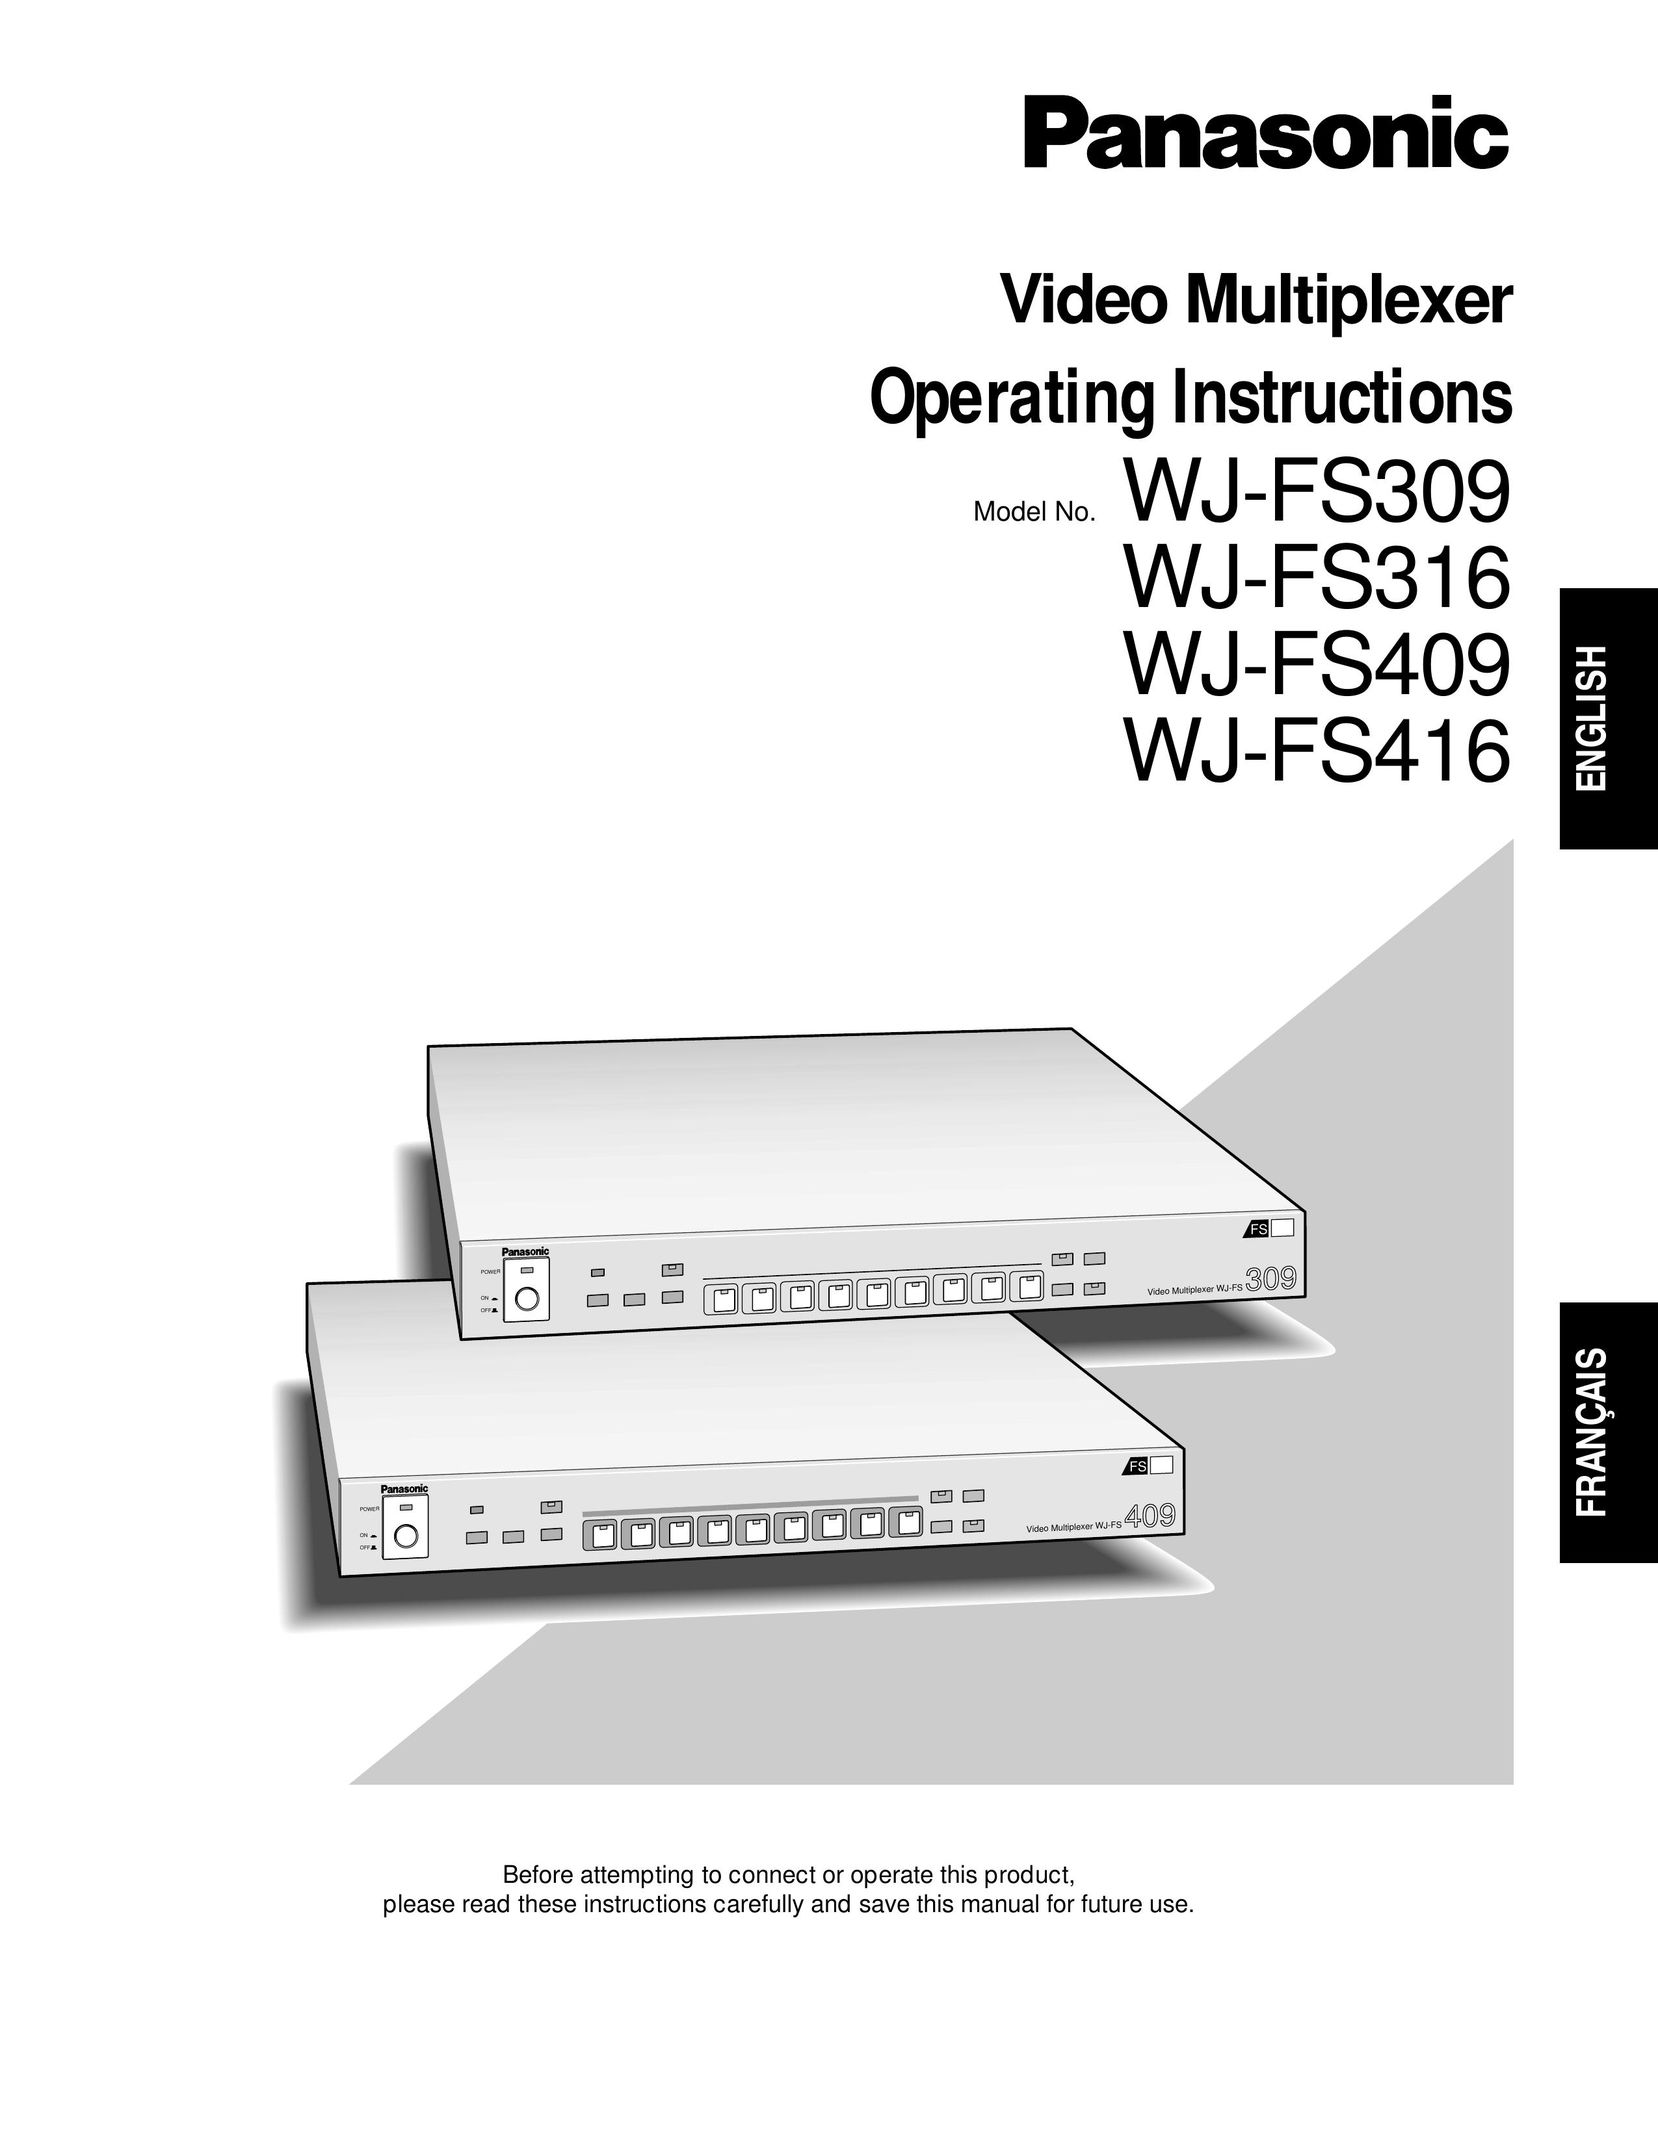 Panasonic WJ-FS409 Home Theater Server User Manual